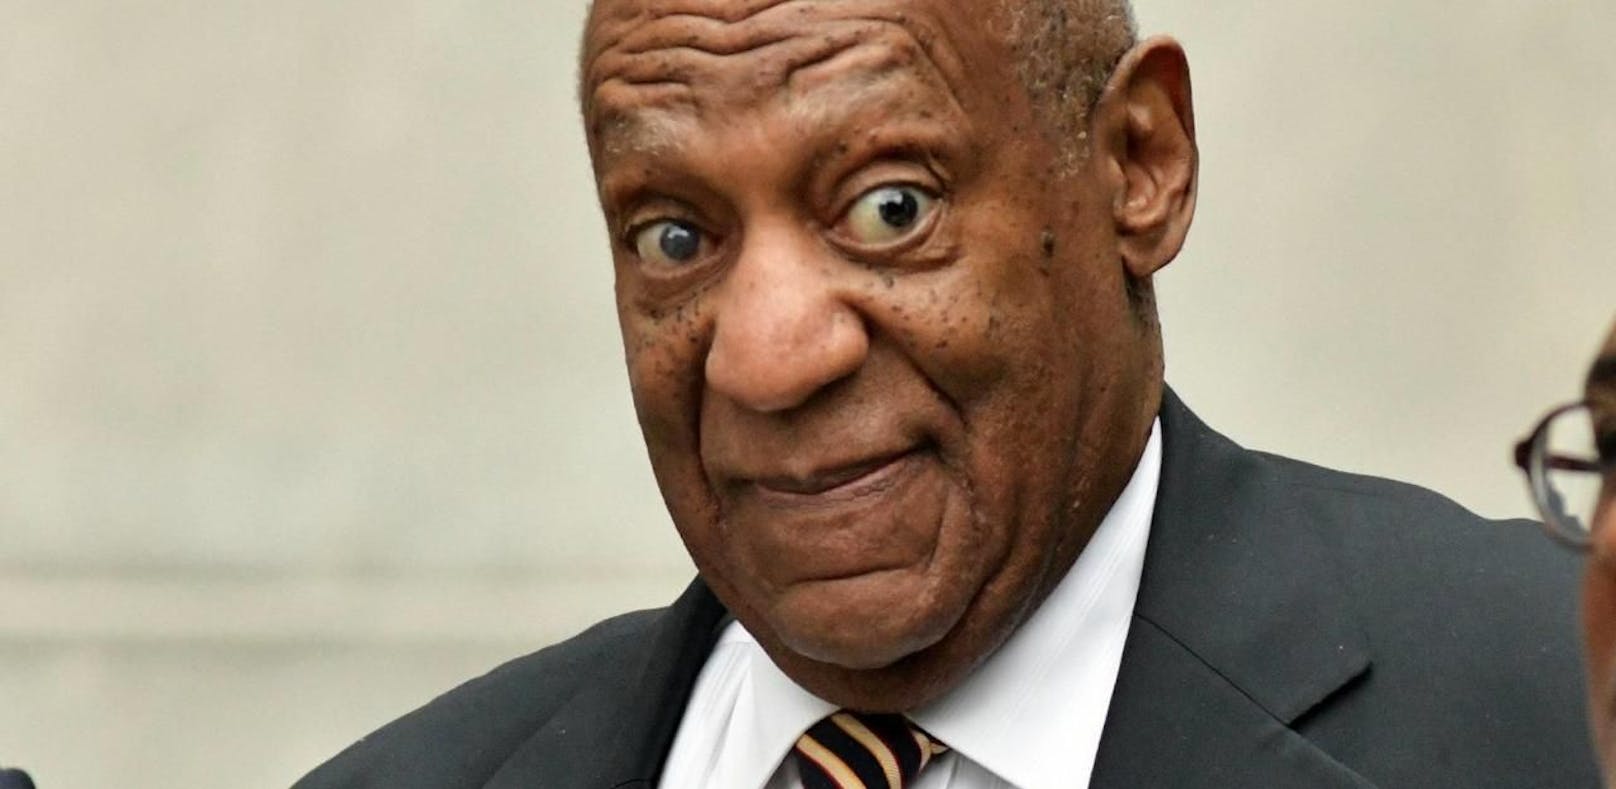 Bill Cosby muss hinter Gittern zur Therapie